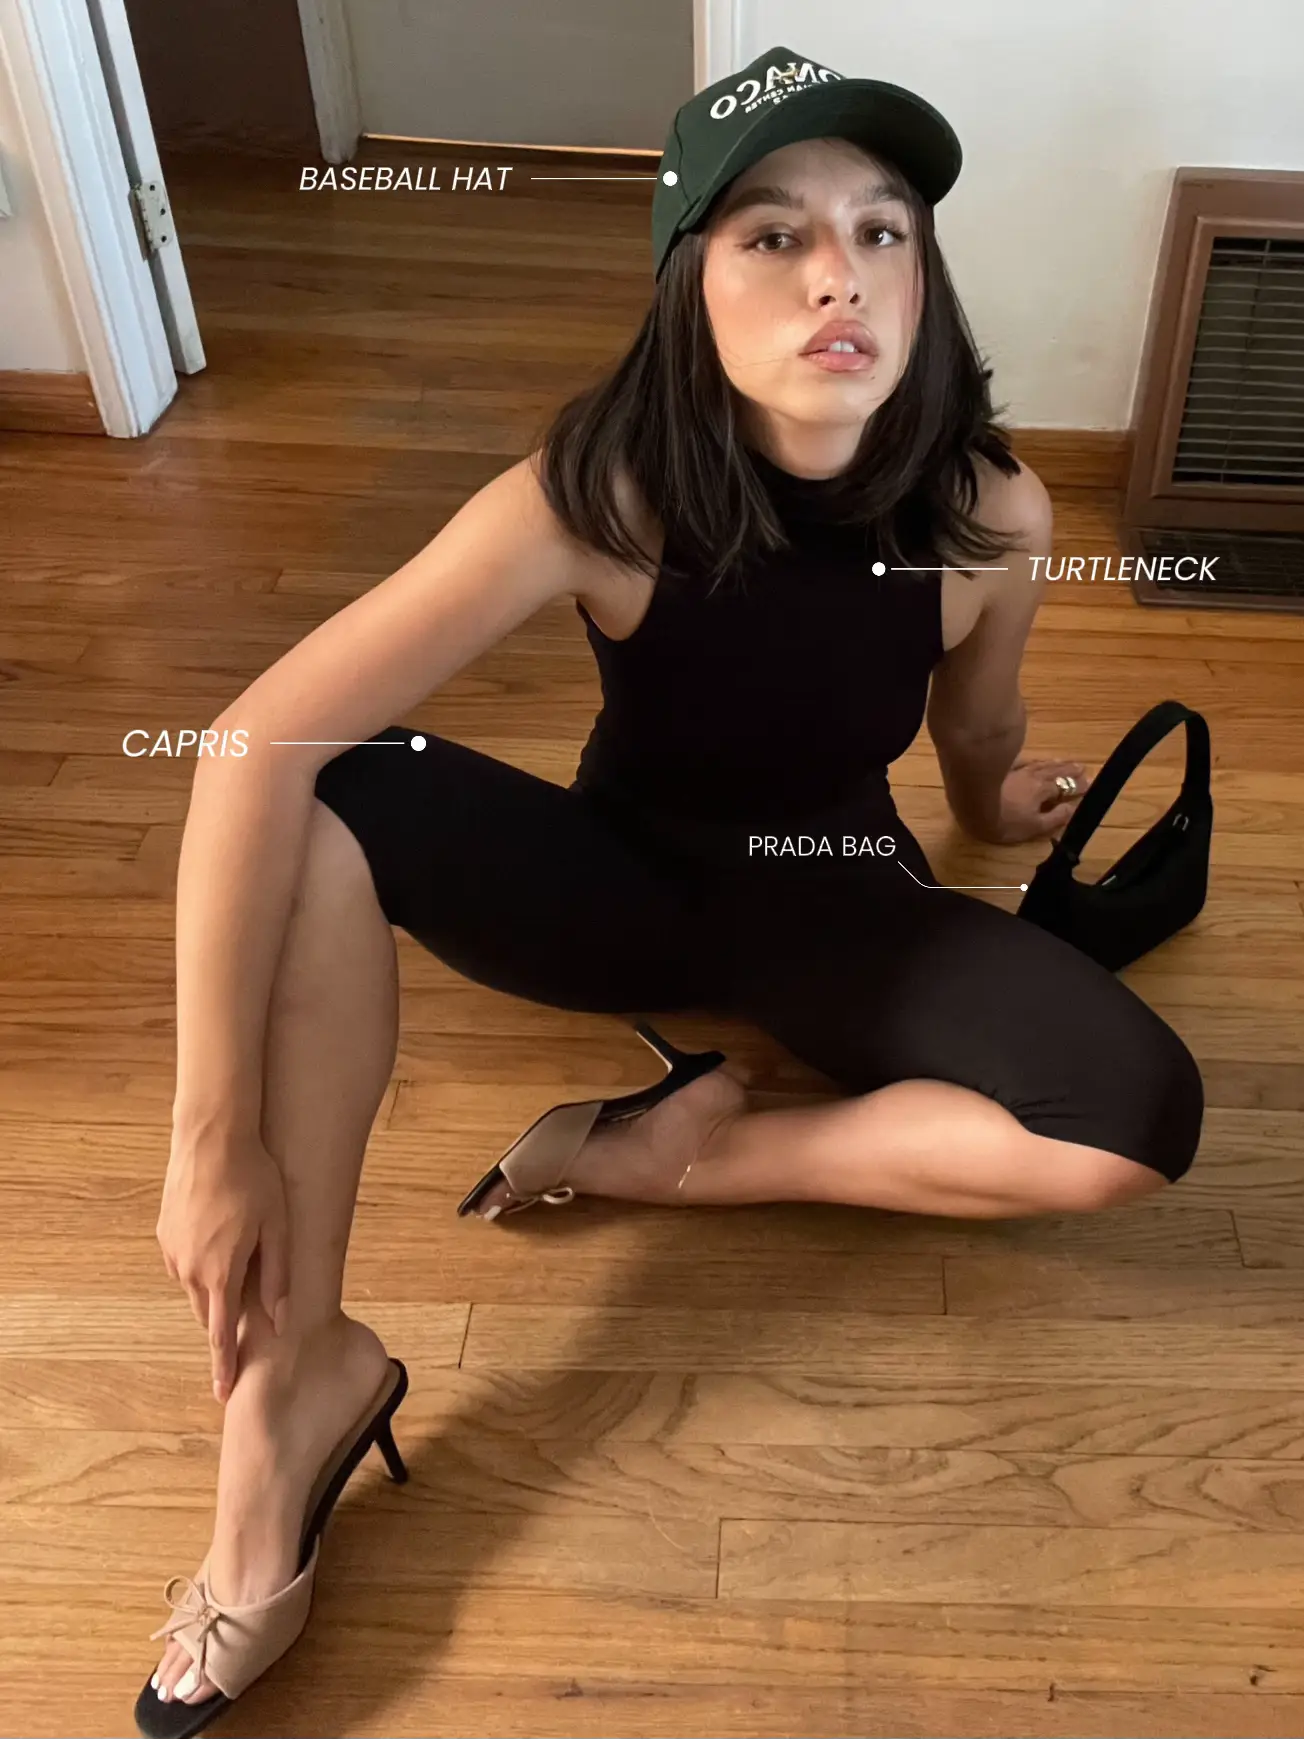 Sofia Richie camel's toe fashion - Picturesofcelebrities